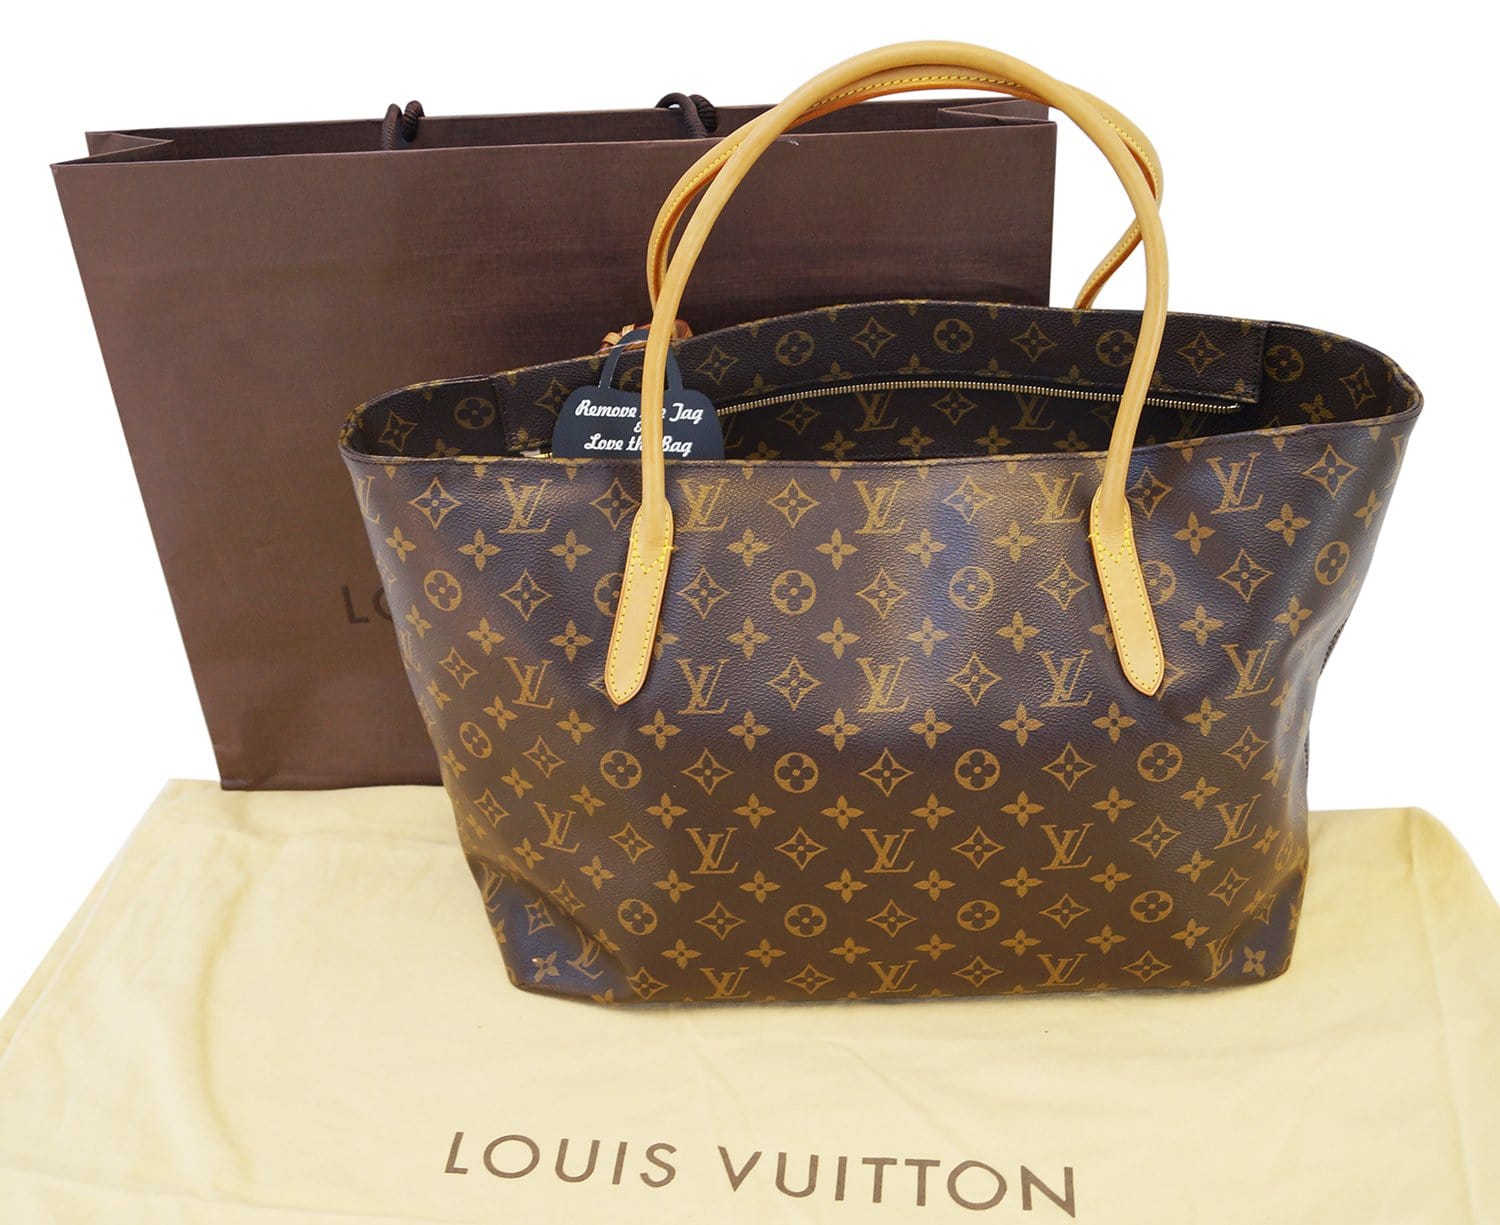 Buy Authentic Louis Vuitton Rare Raspail Bag Online in India 